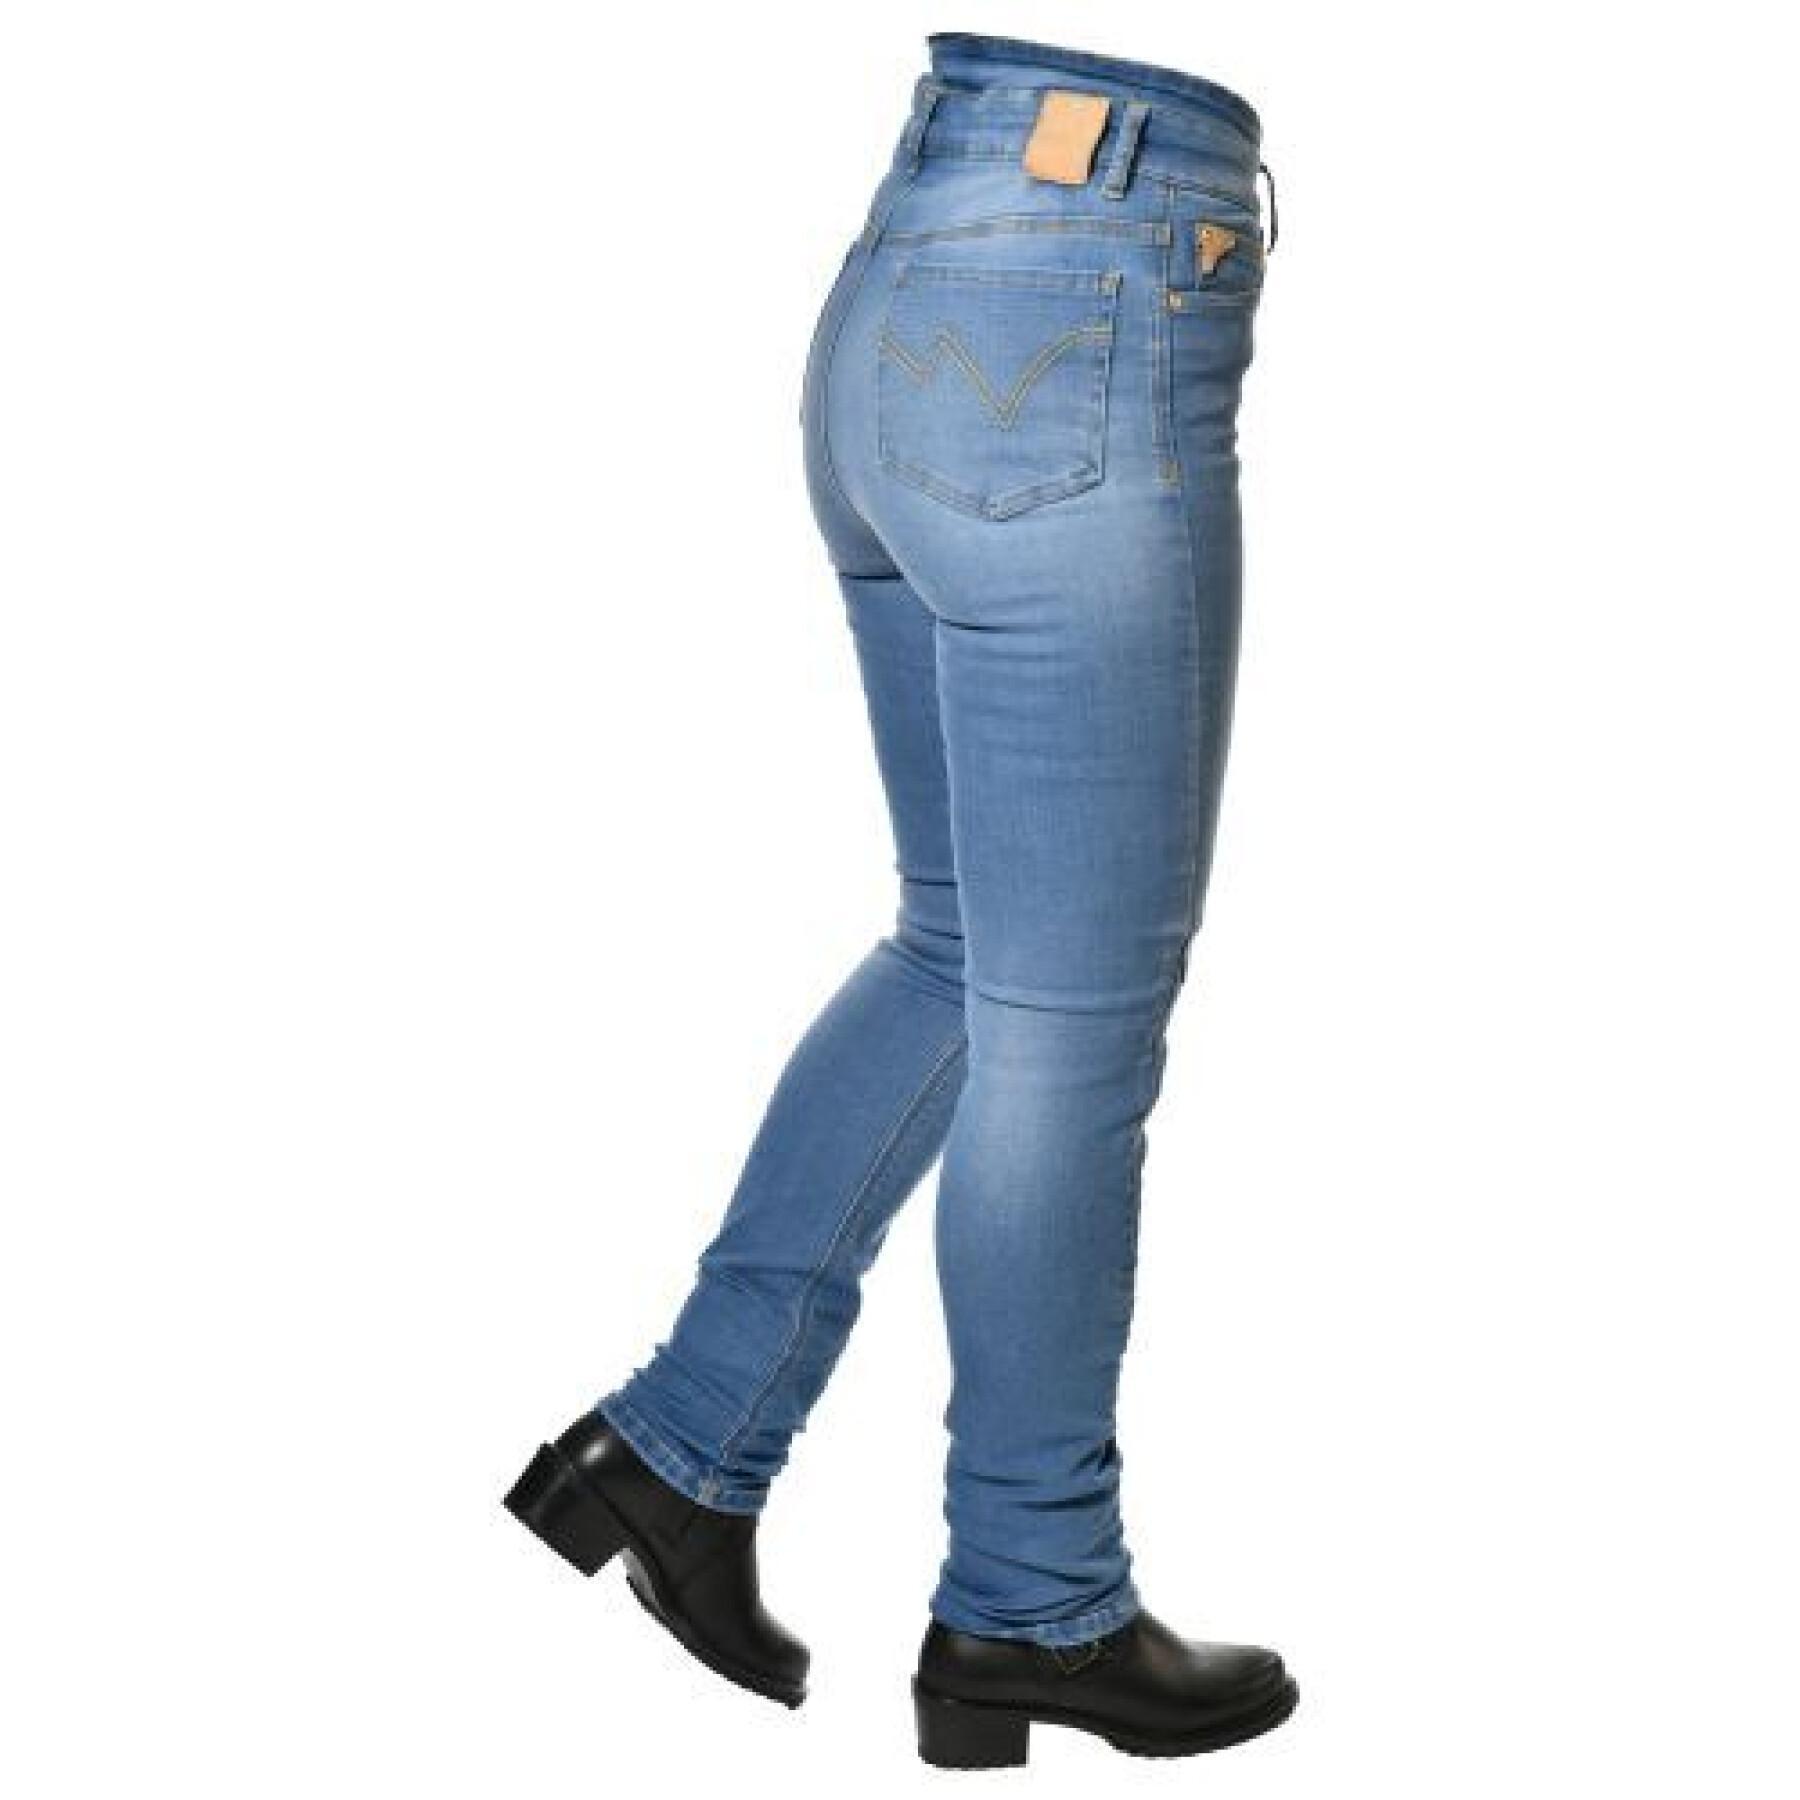 Jeans moto donna Overlap Erin Single Layer Homologated